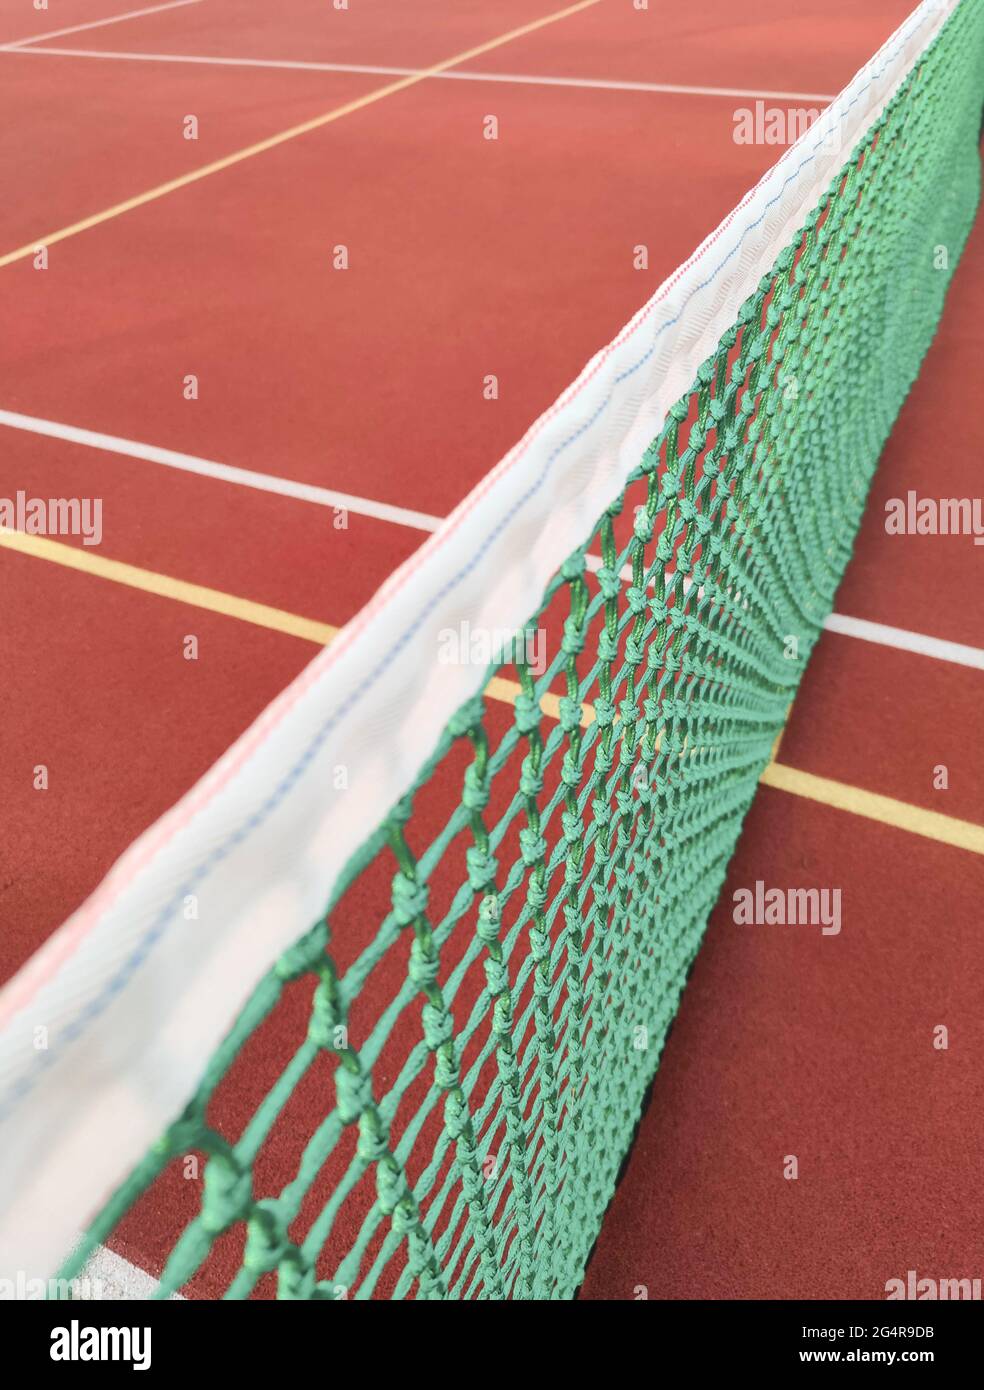 Tennis game. empty tennis court. Sport, recreation concept photo Stock Photo